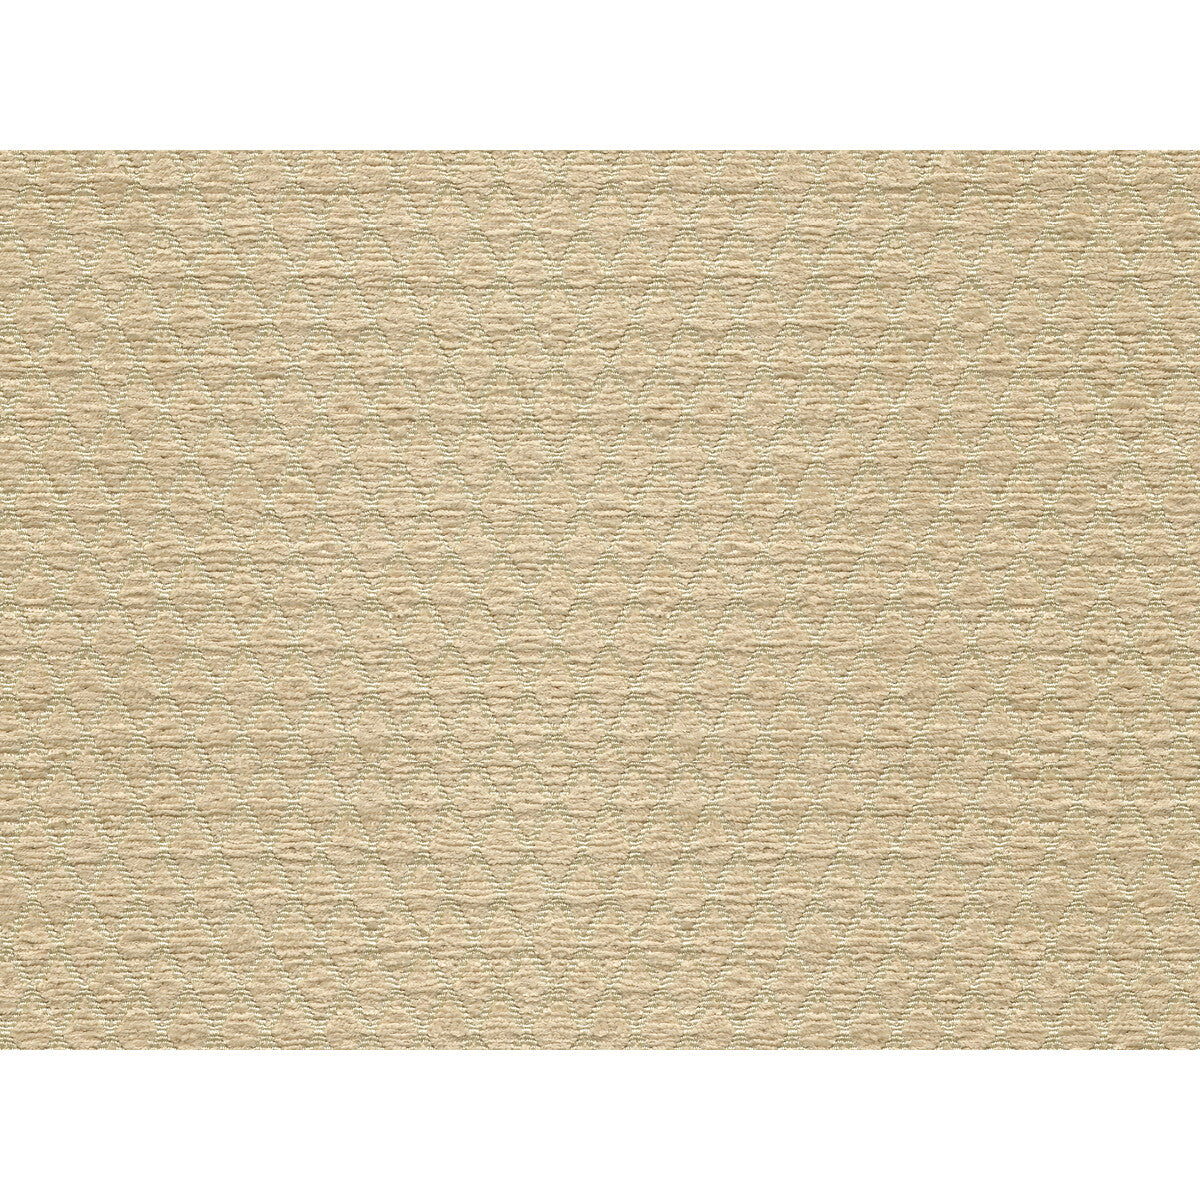 Kravet Smart fabric in 34475-116 color - pattern 34475.116.0 - by Kravet Smart